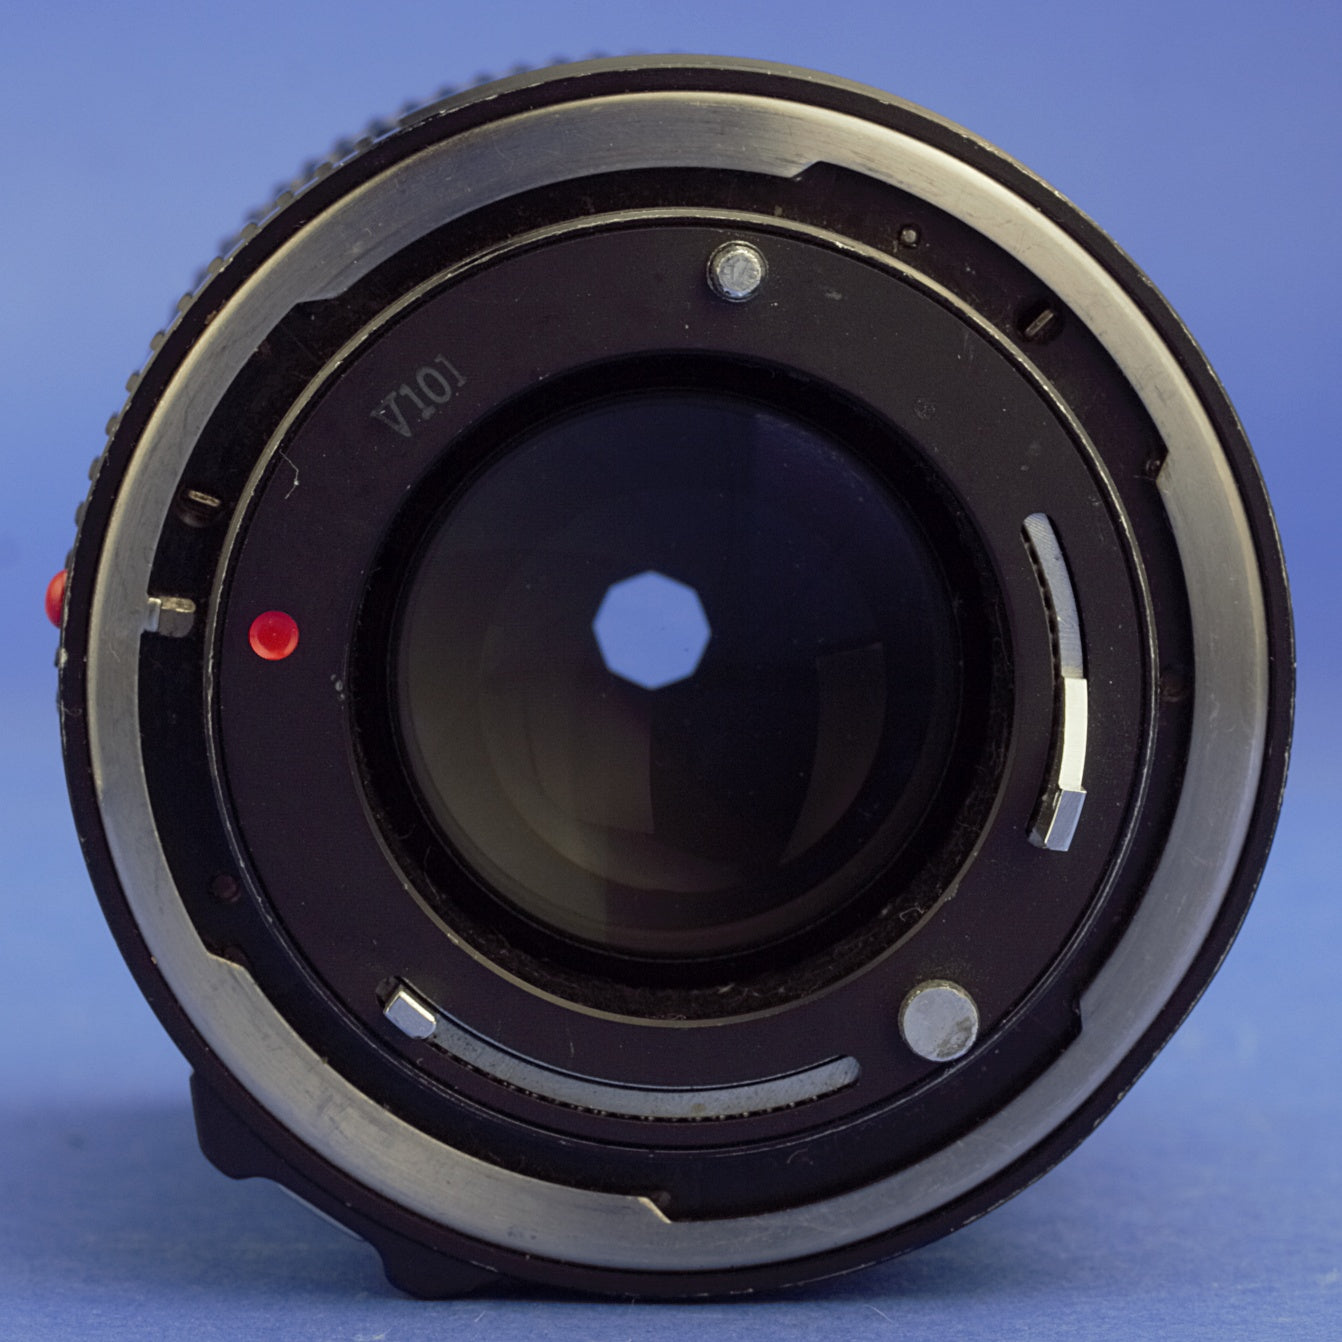 Canon FD 100mm F2 Lens